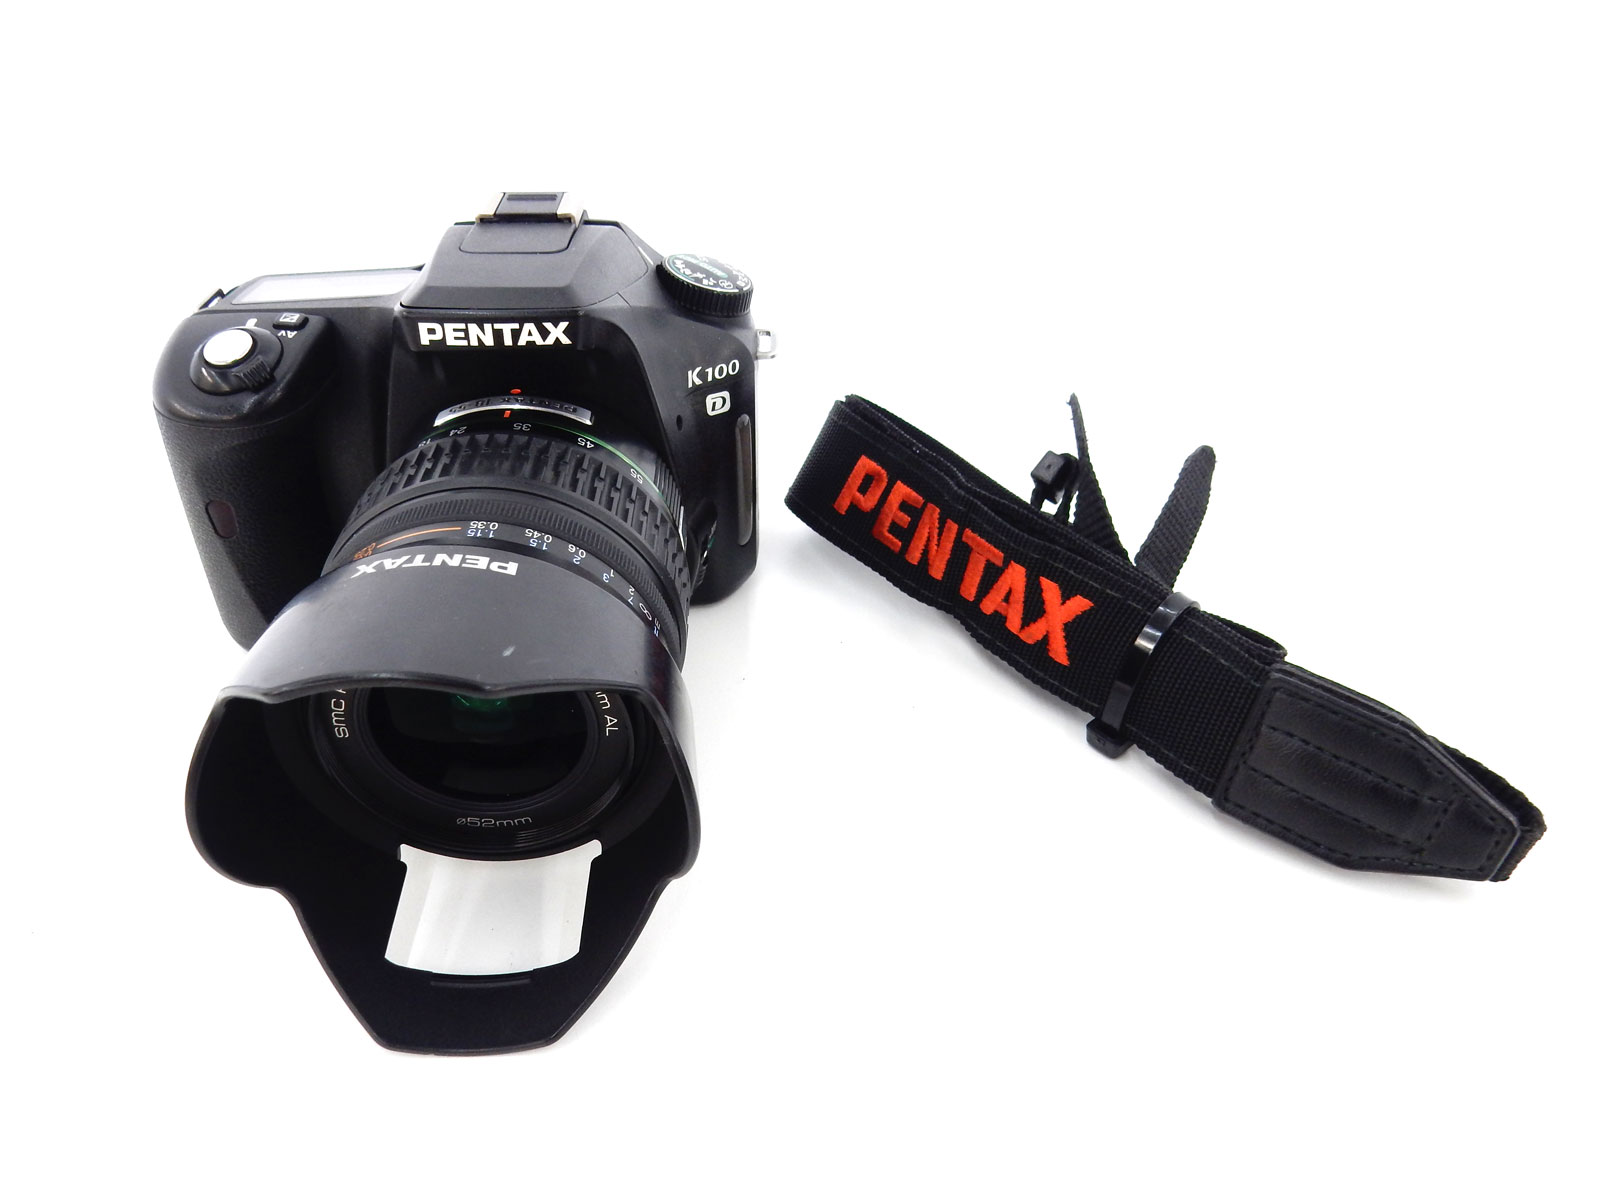 PENTAX/ペンタックス デジタル 一眼レフ カメラ K100D SMC PENTAX-DA 標準レンズ付き 買取 茨城 ニコニコ堂下妻店